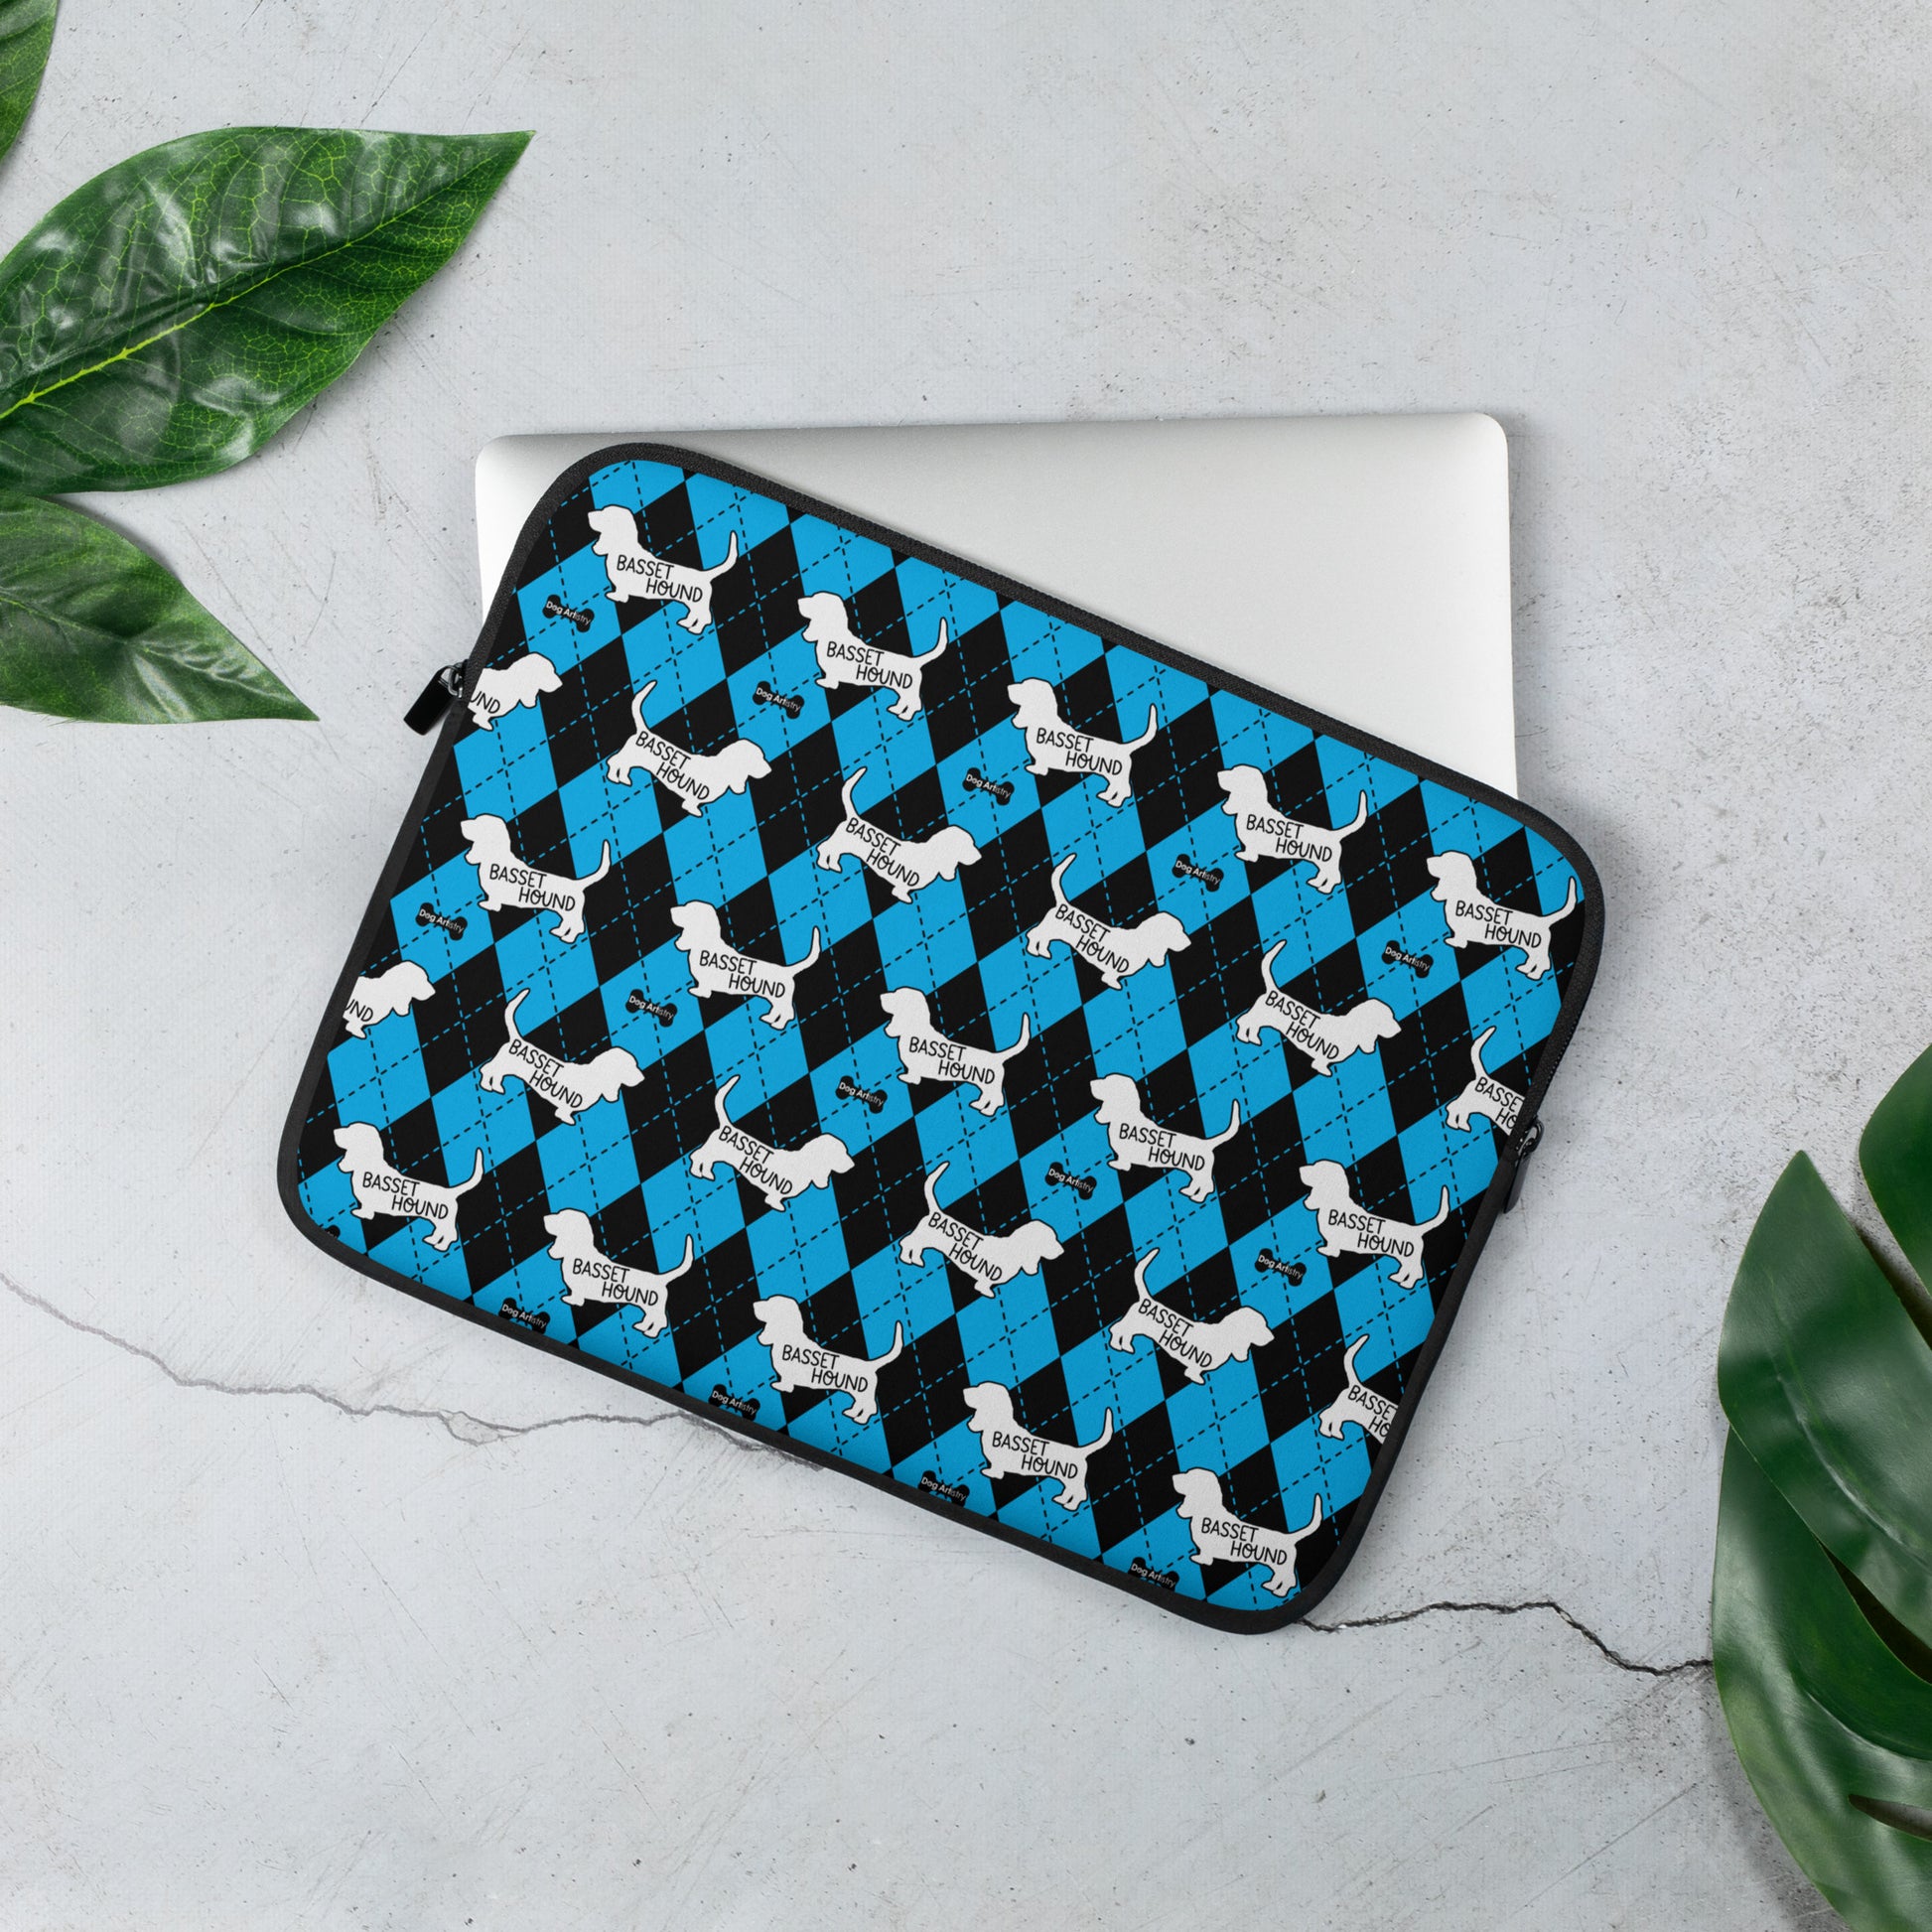 Basset Hound blue and black argyle laptop sleeve by Dog Artistry